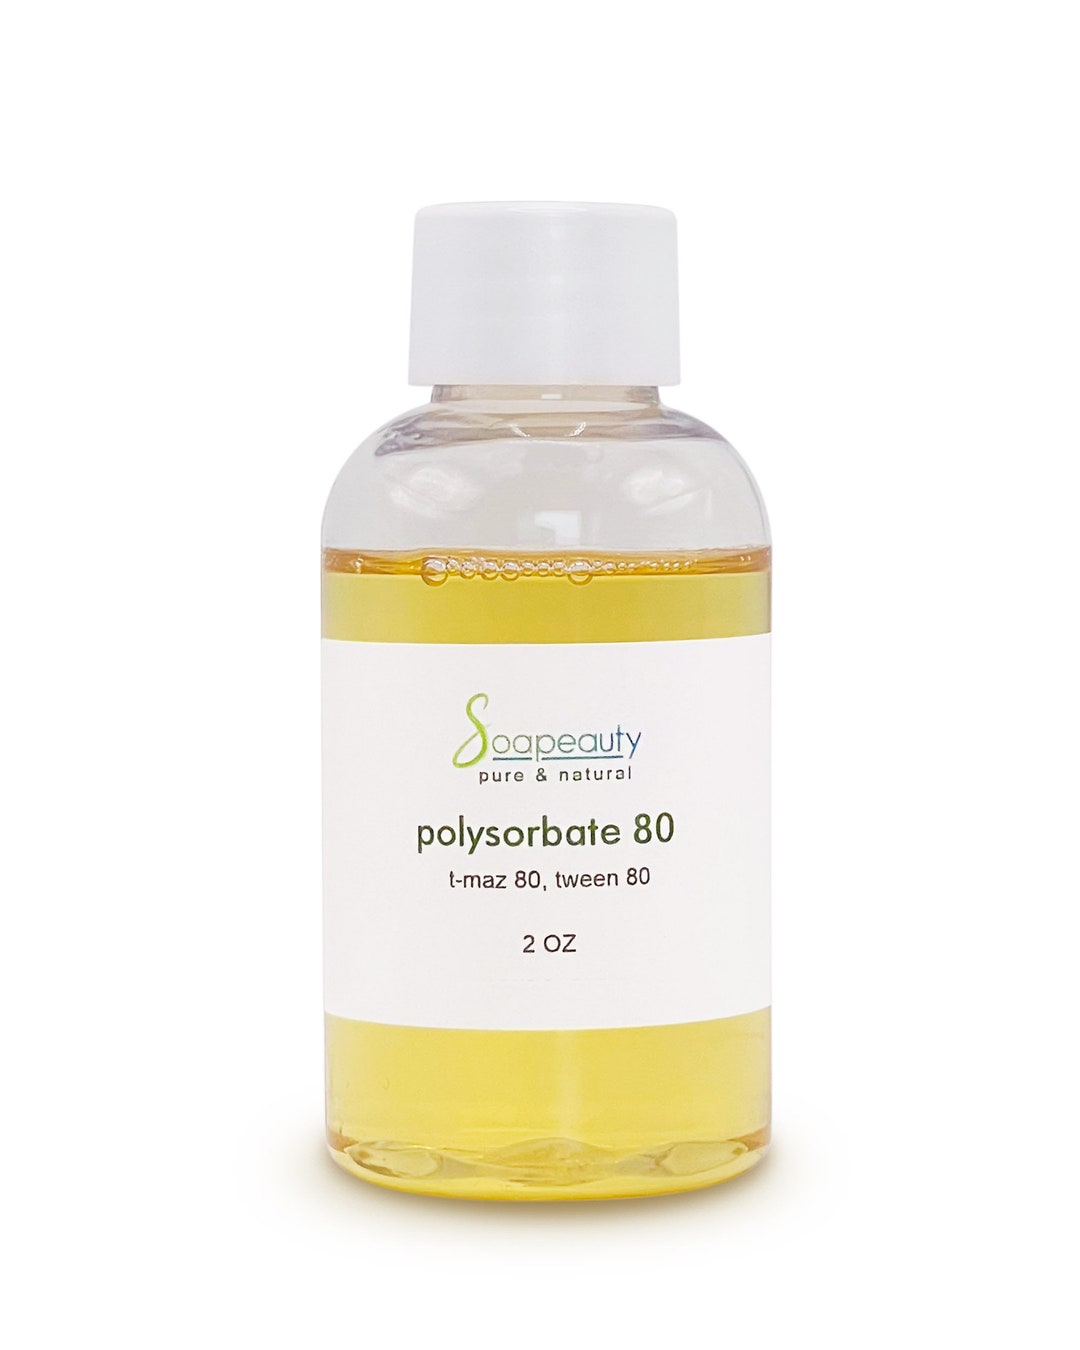 Polysorbate 80, Soap making supplies, bath and body supplies. AKA Tween 80  USA